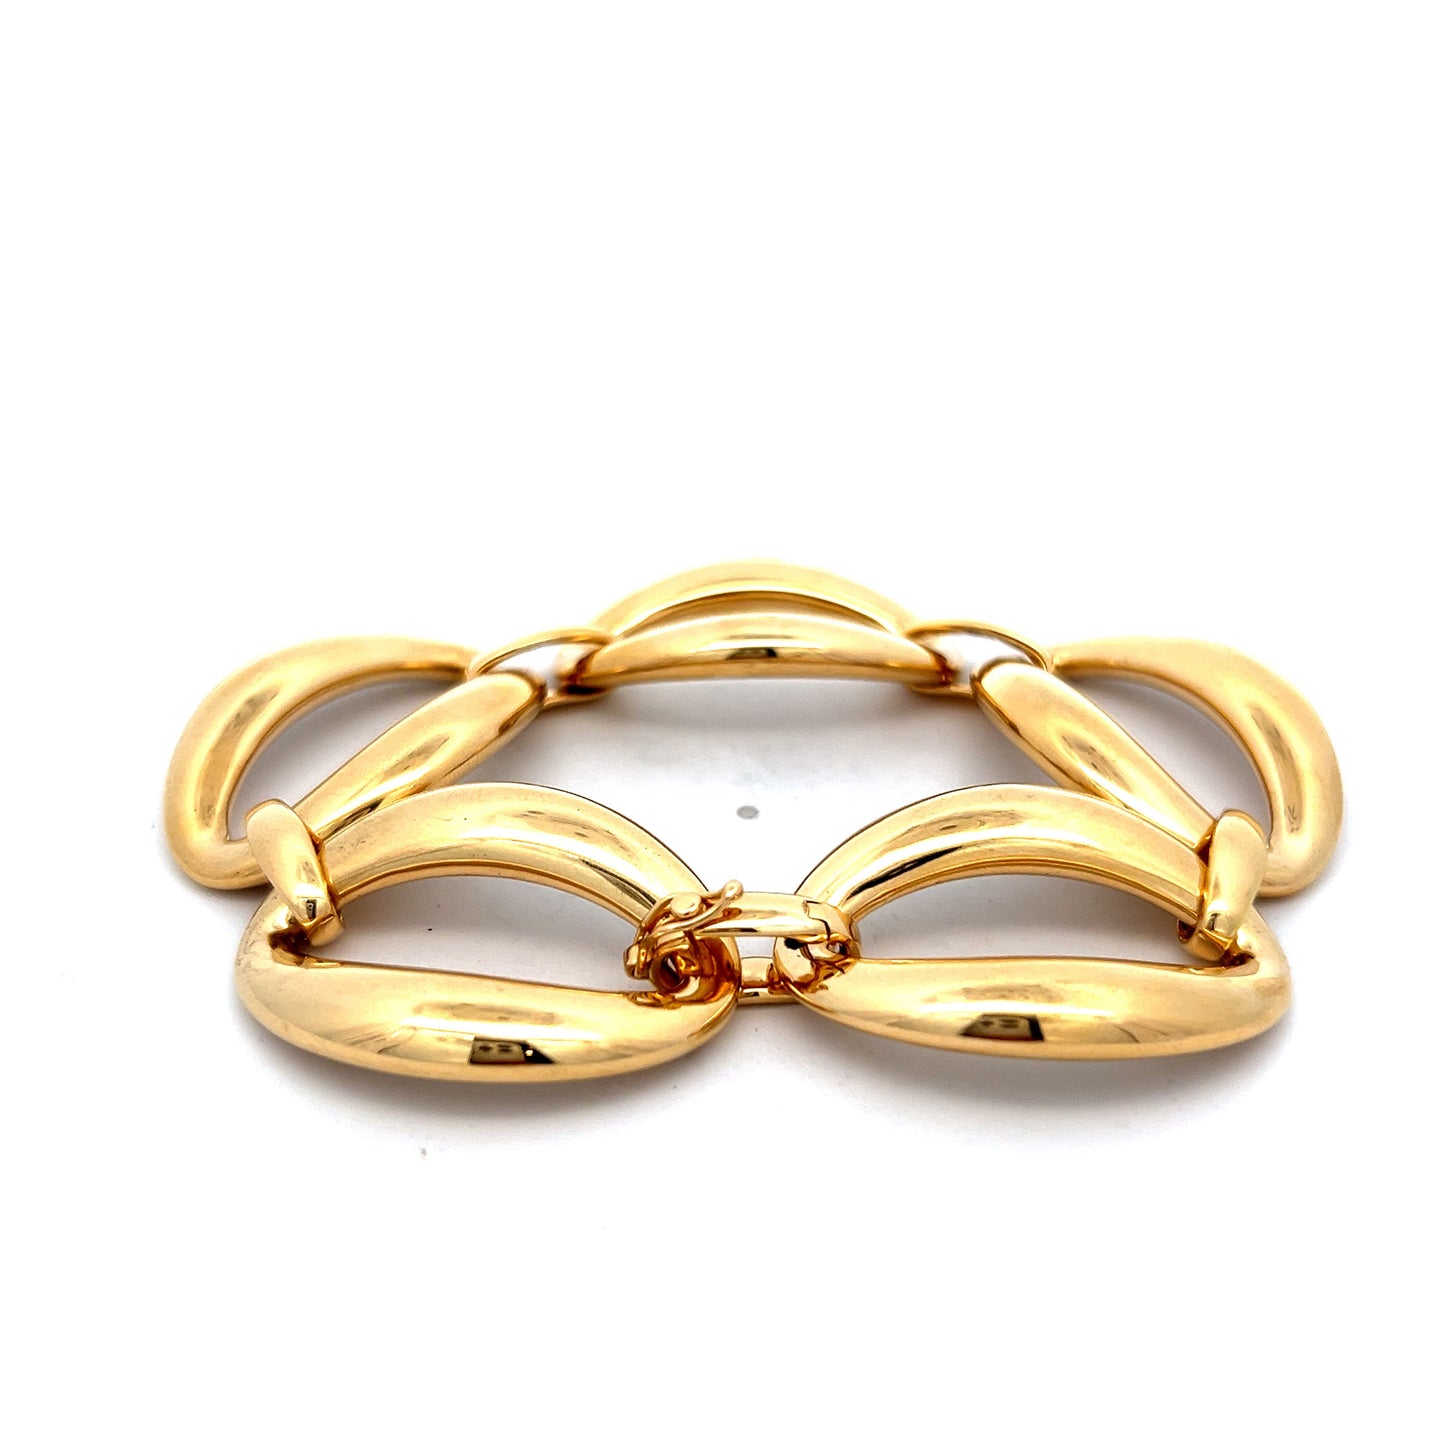 Oval Link Chain Bracelet in 18k Yellow Gold